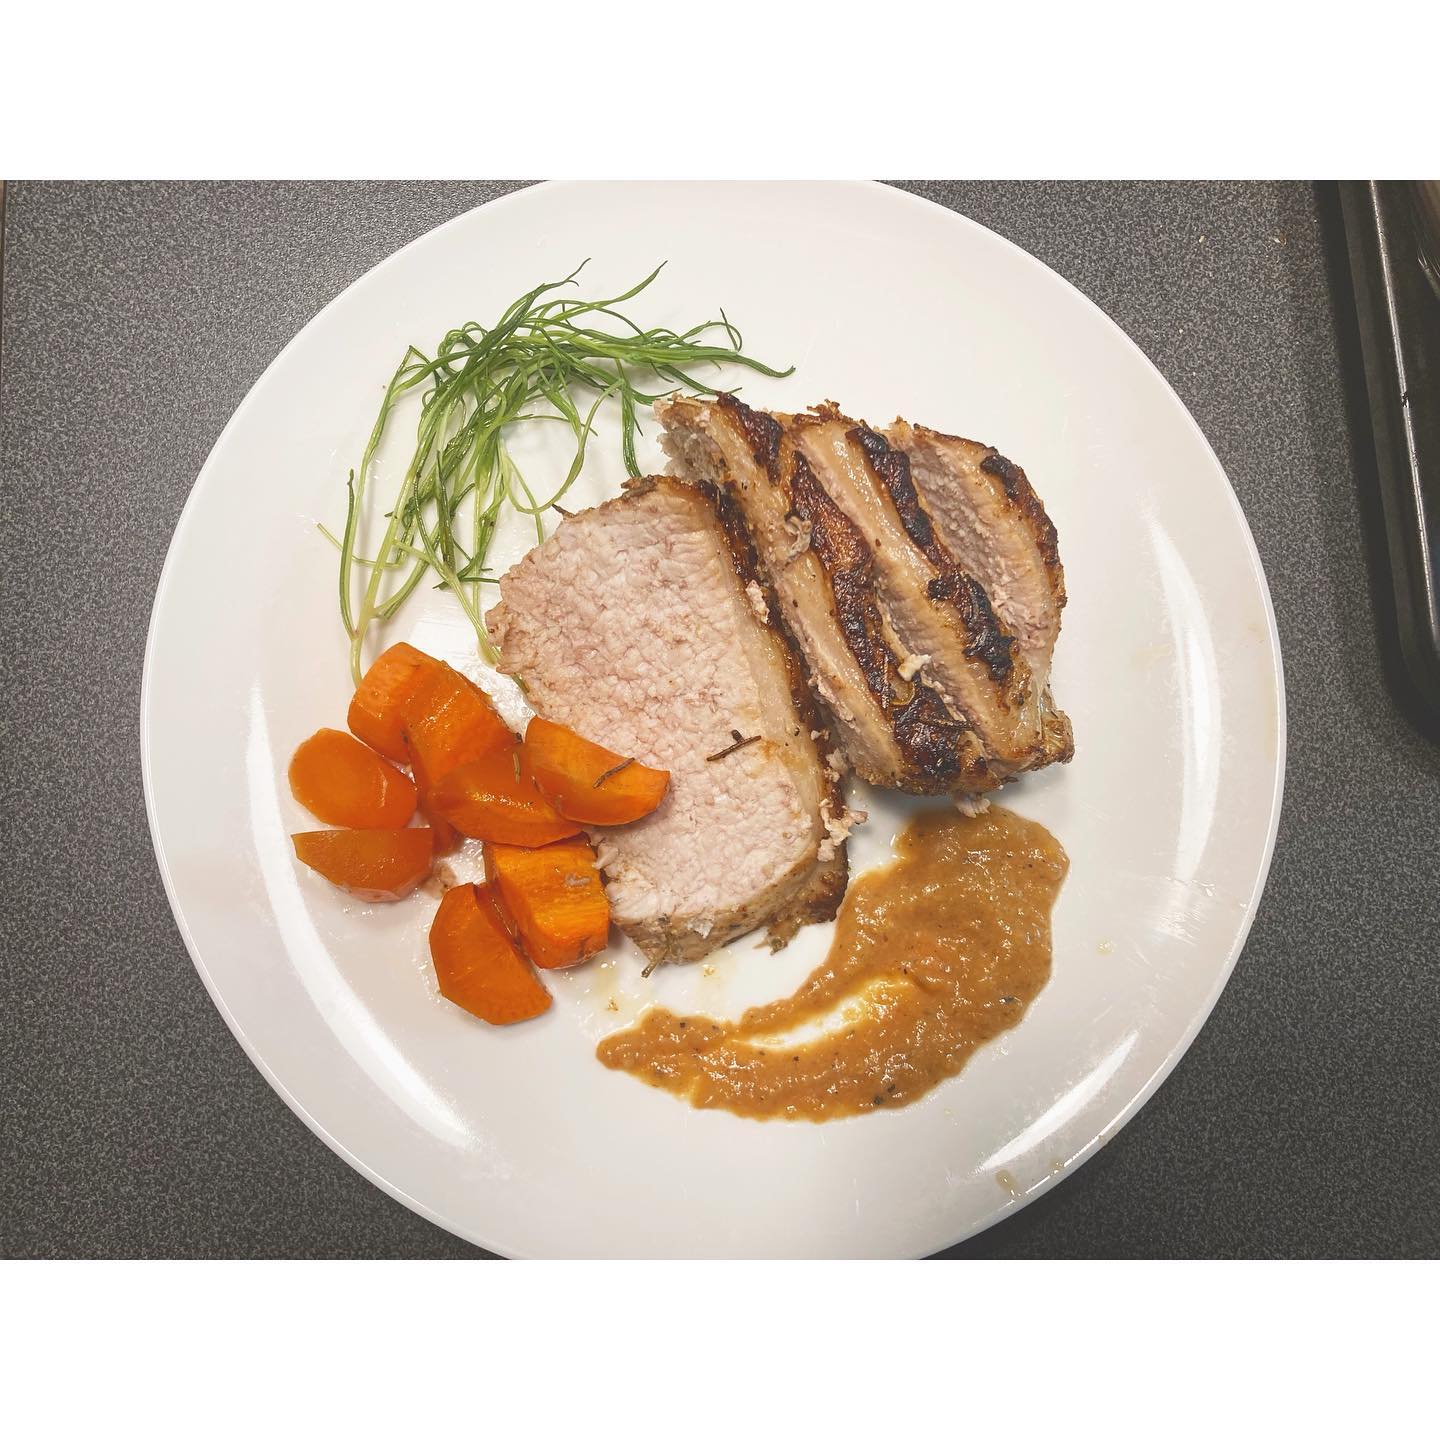 Roast pork with Japanese persimmon sauce

祖父母から届いた柿のソースでローストポーク。

#レシピ #ブログ初心者 #料理すきな人と繋がりたい #料理好きな人と繋がりたい #おうちごはん部 　#ごはん記録 #クッキングラマー#recipeoftheday #foodporn #foodblogger #foodstagram #photooftheday #instalike #yummyyummy #eatright #cookingathome #instafood #japanesefood #yummy #dinner #homemadecooking  #porkrecipes #roastpork #ローストポーク　#柿レシピ